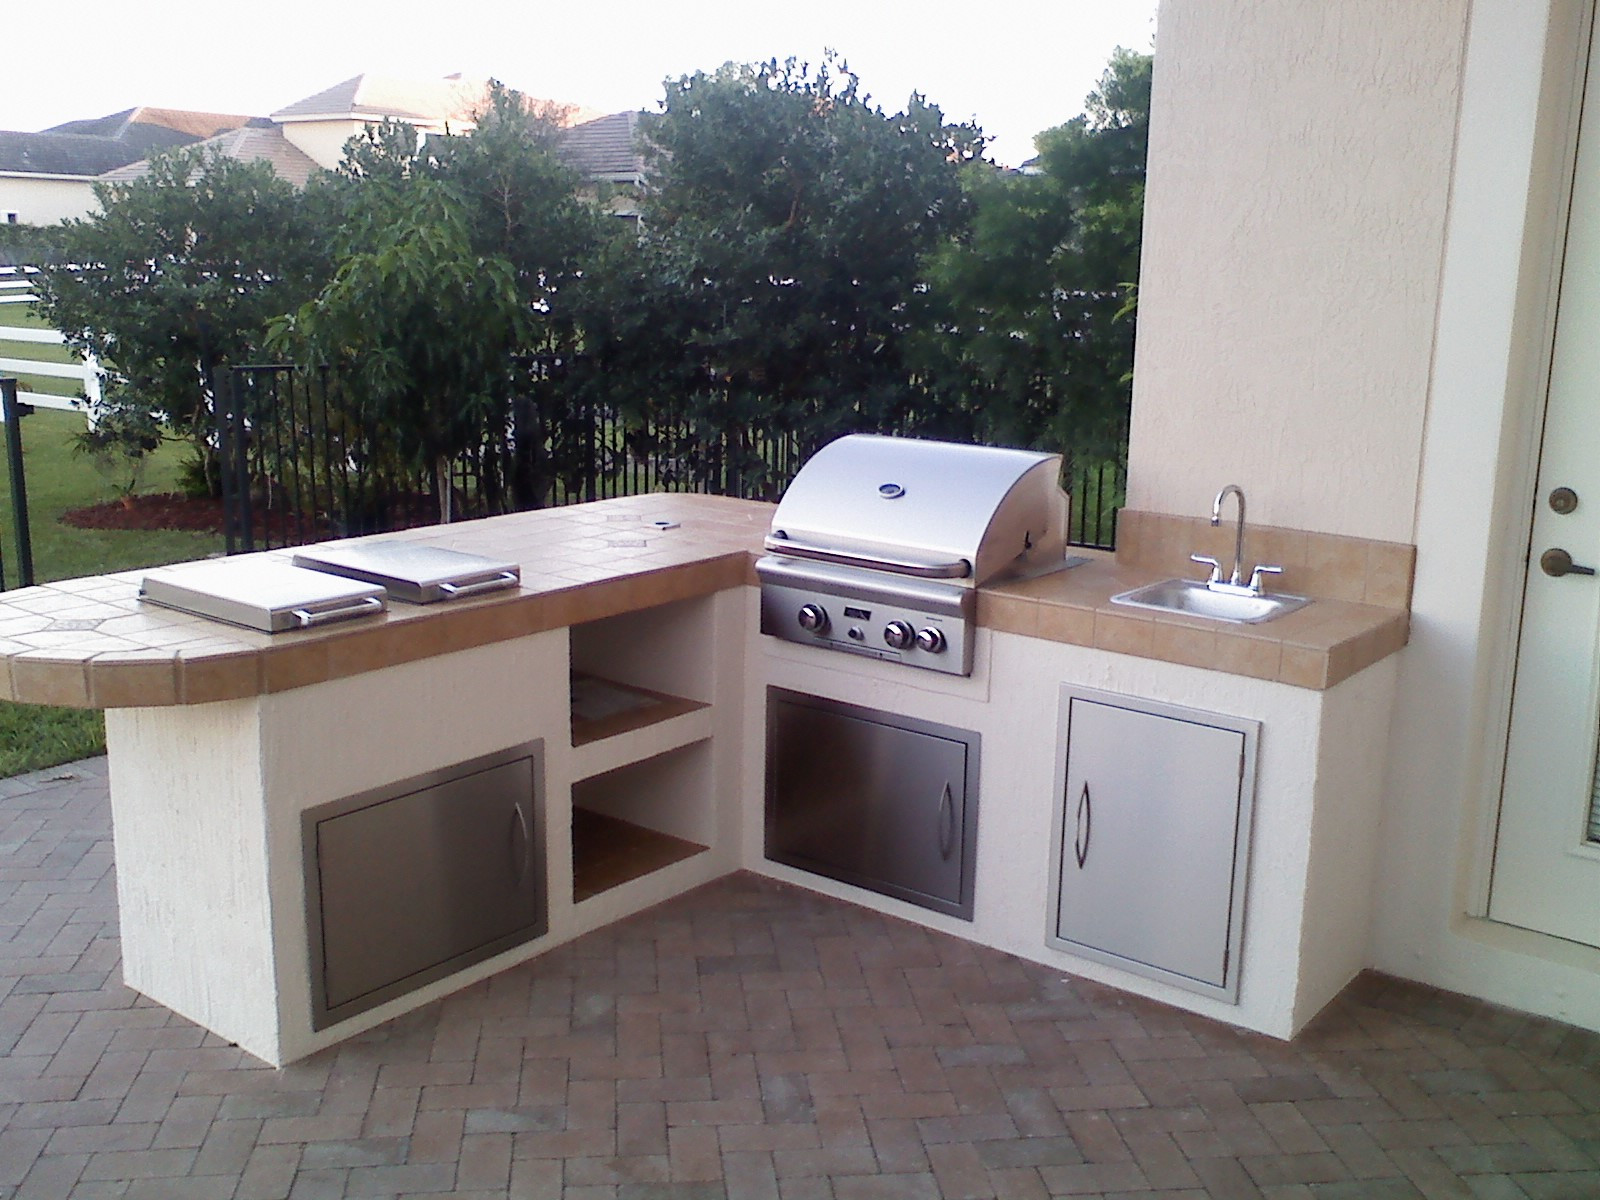 Modular Outdoor Kitchen Kits
 35 Ideas about Prefab Outdoor Kitchen Kits TheyDesign